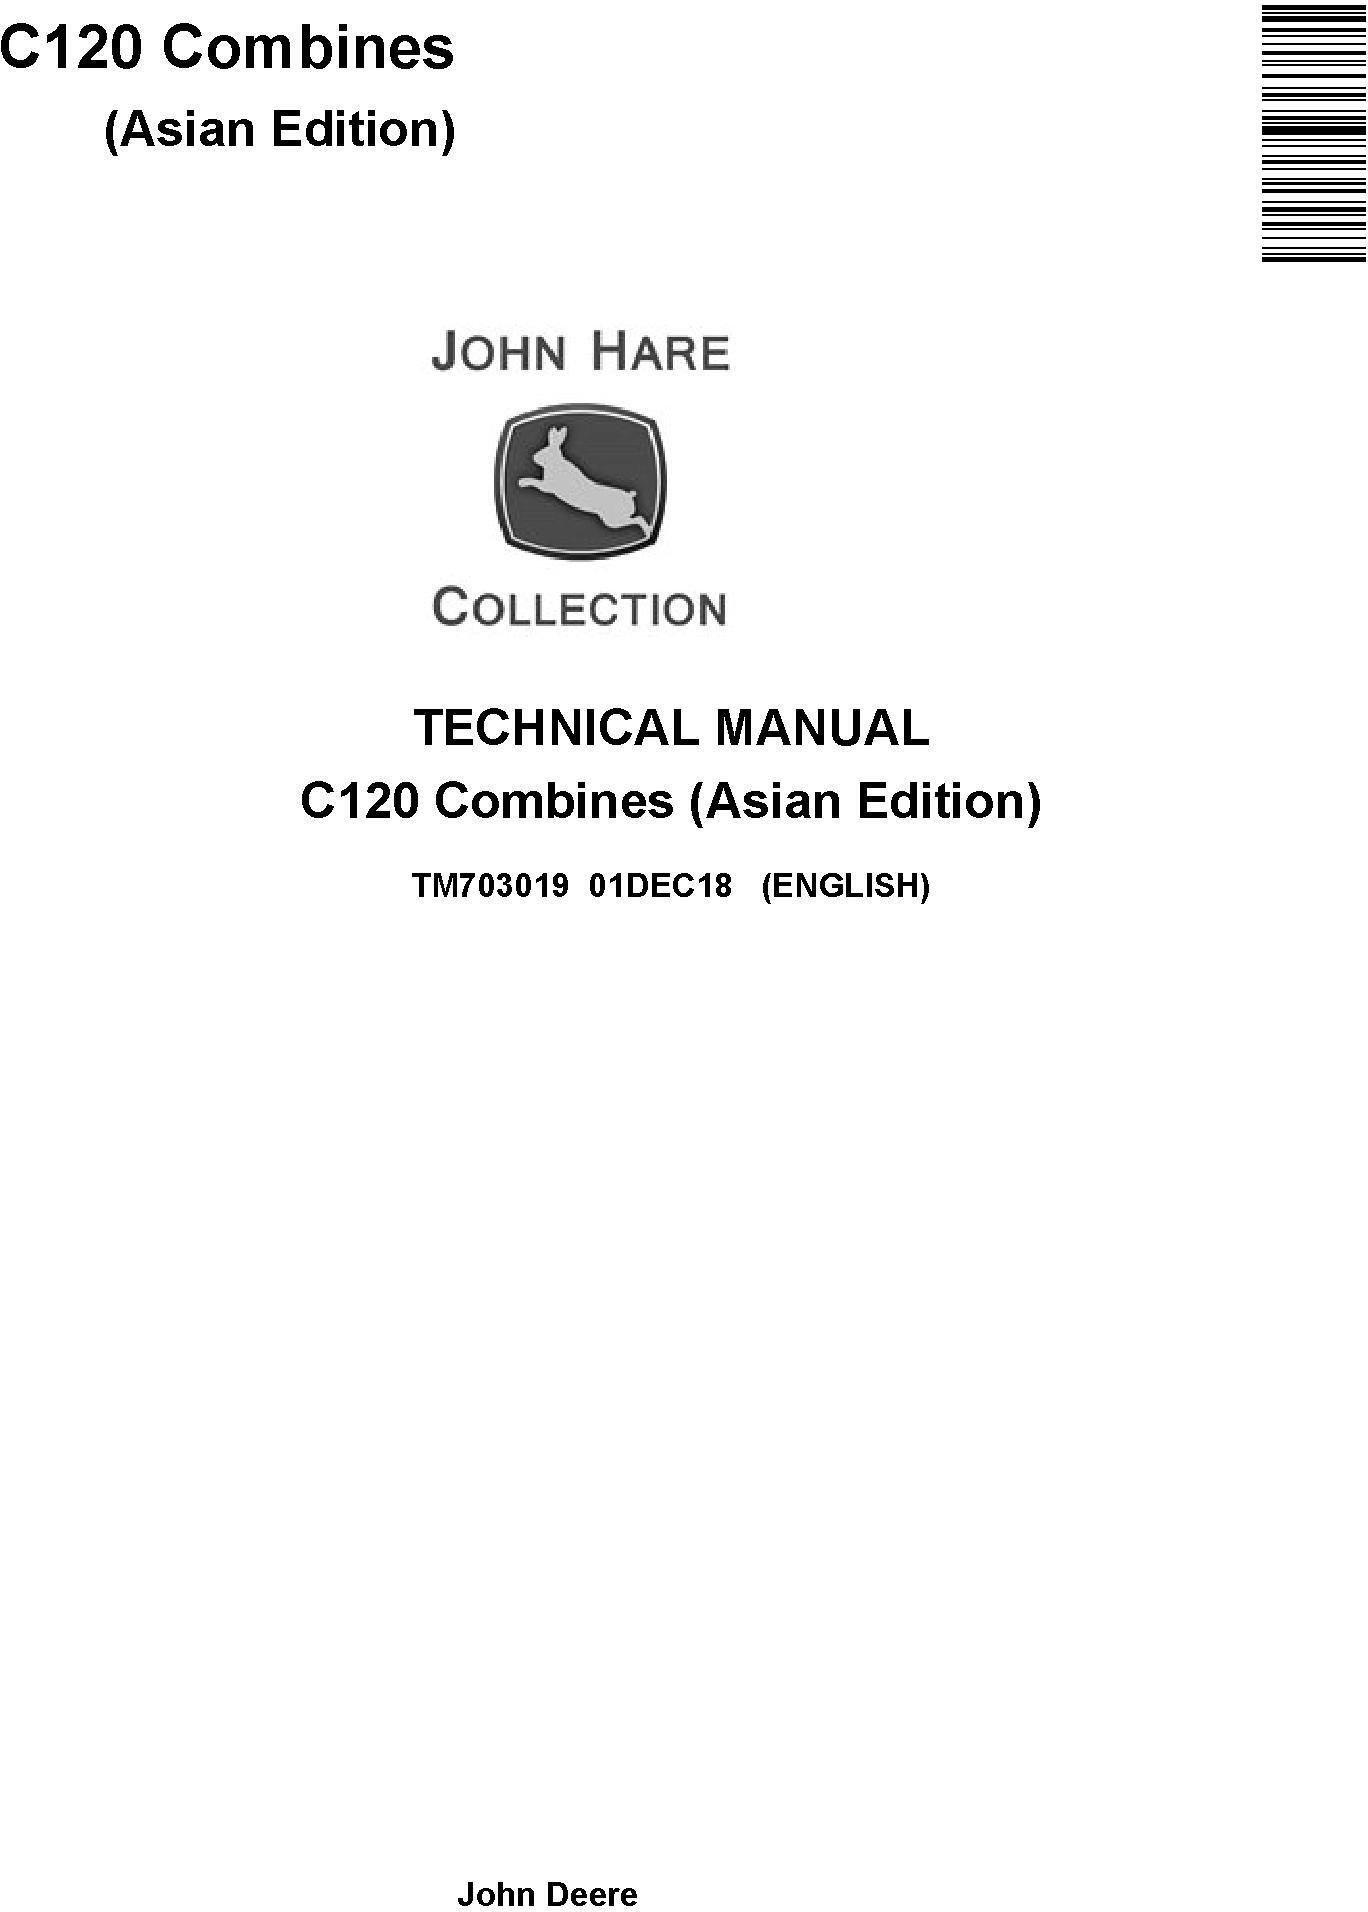 John Deere C120 Combines (Asian Edition) Technical Service Manual (TM703019)